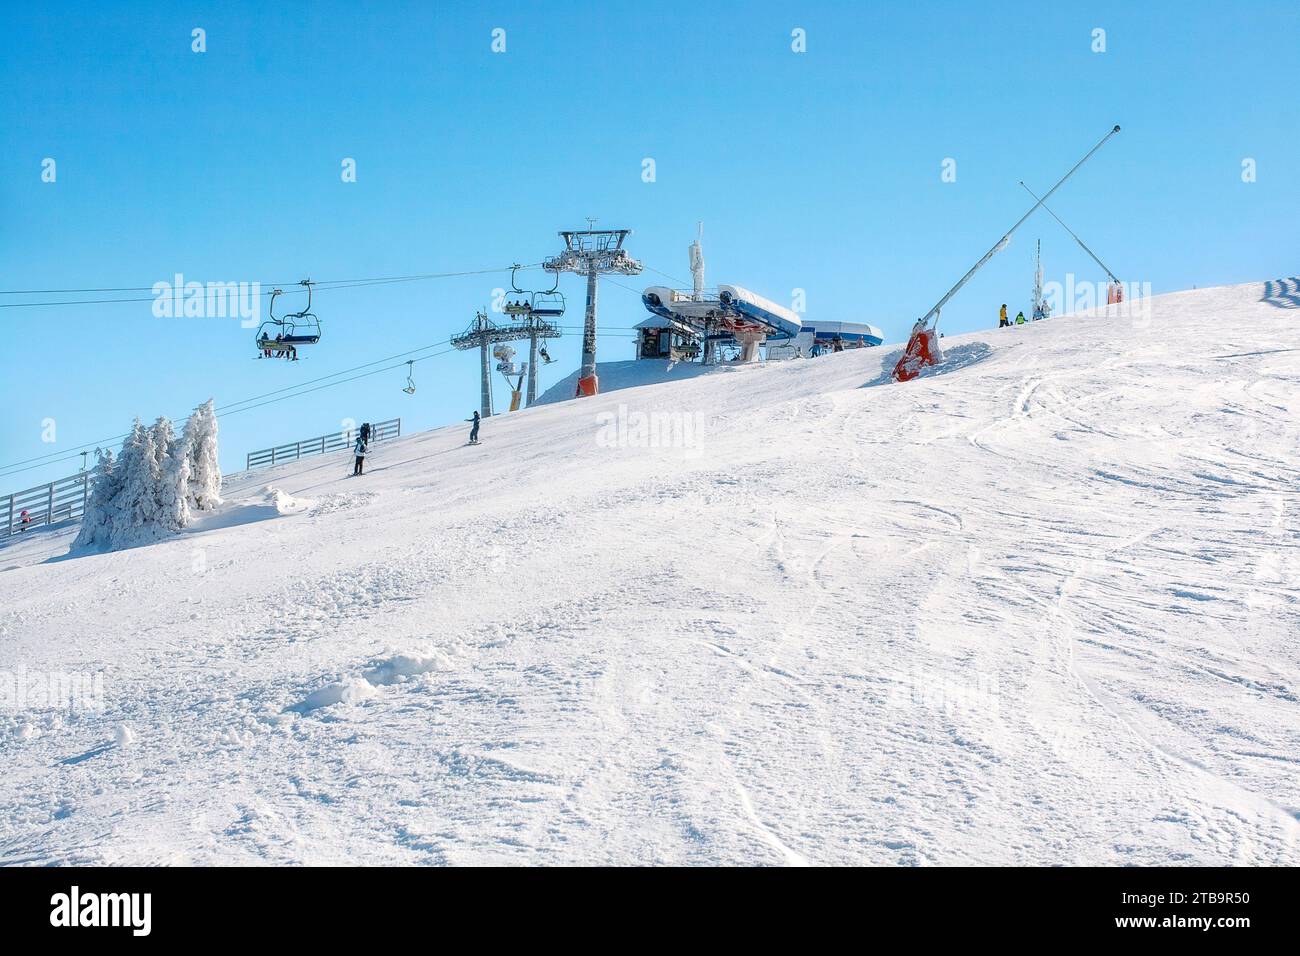 Kopaonik, Serbia - January 22, 2016: Ski resort Kopaonik, Serbia, ski lift, ski slope, people skiing down from the lift Stock Photo